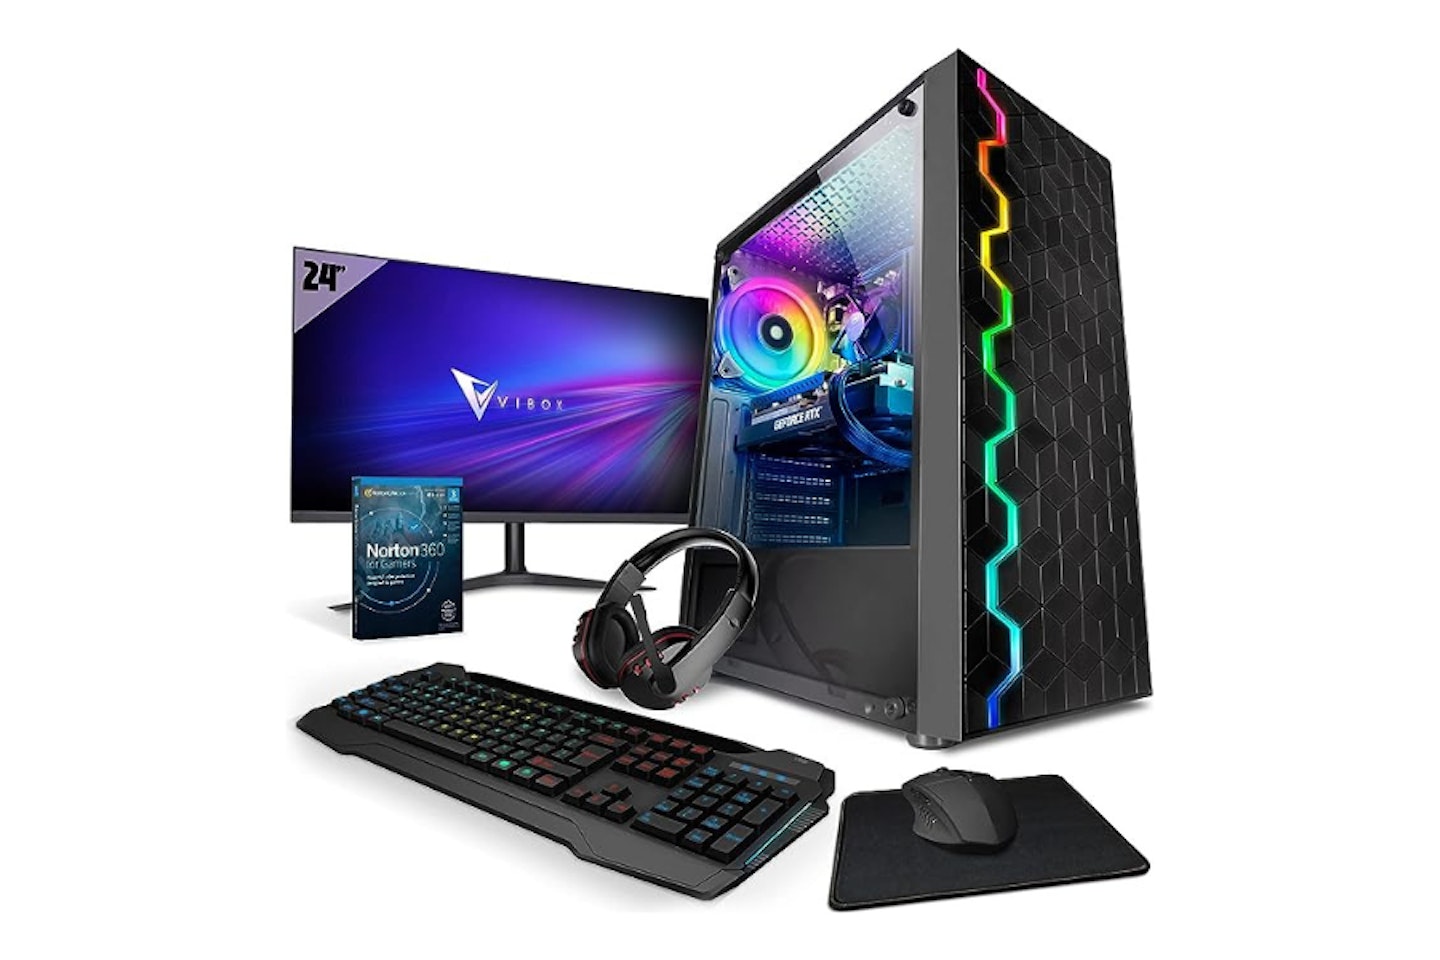 Vibox Element X Blue Gaming PC Review